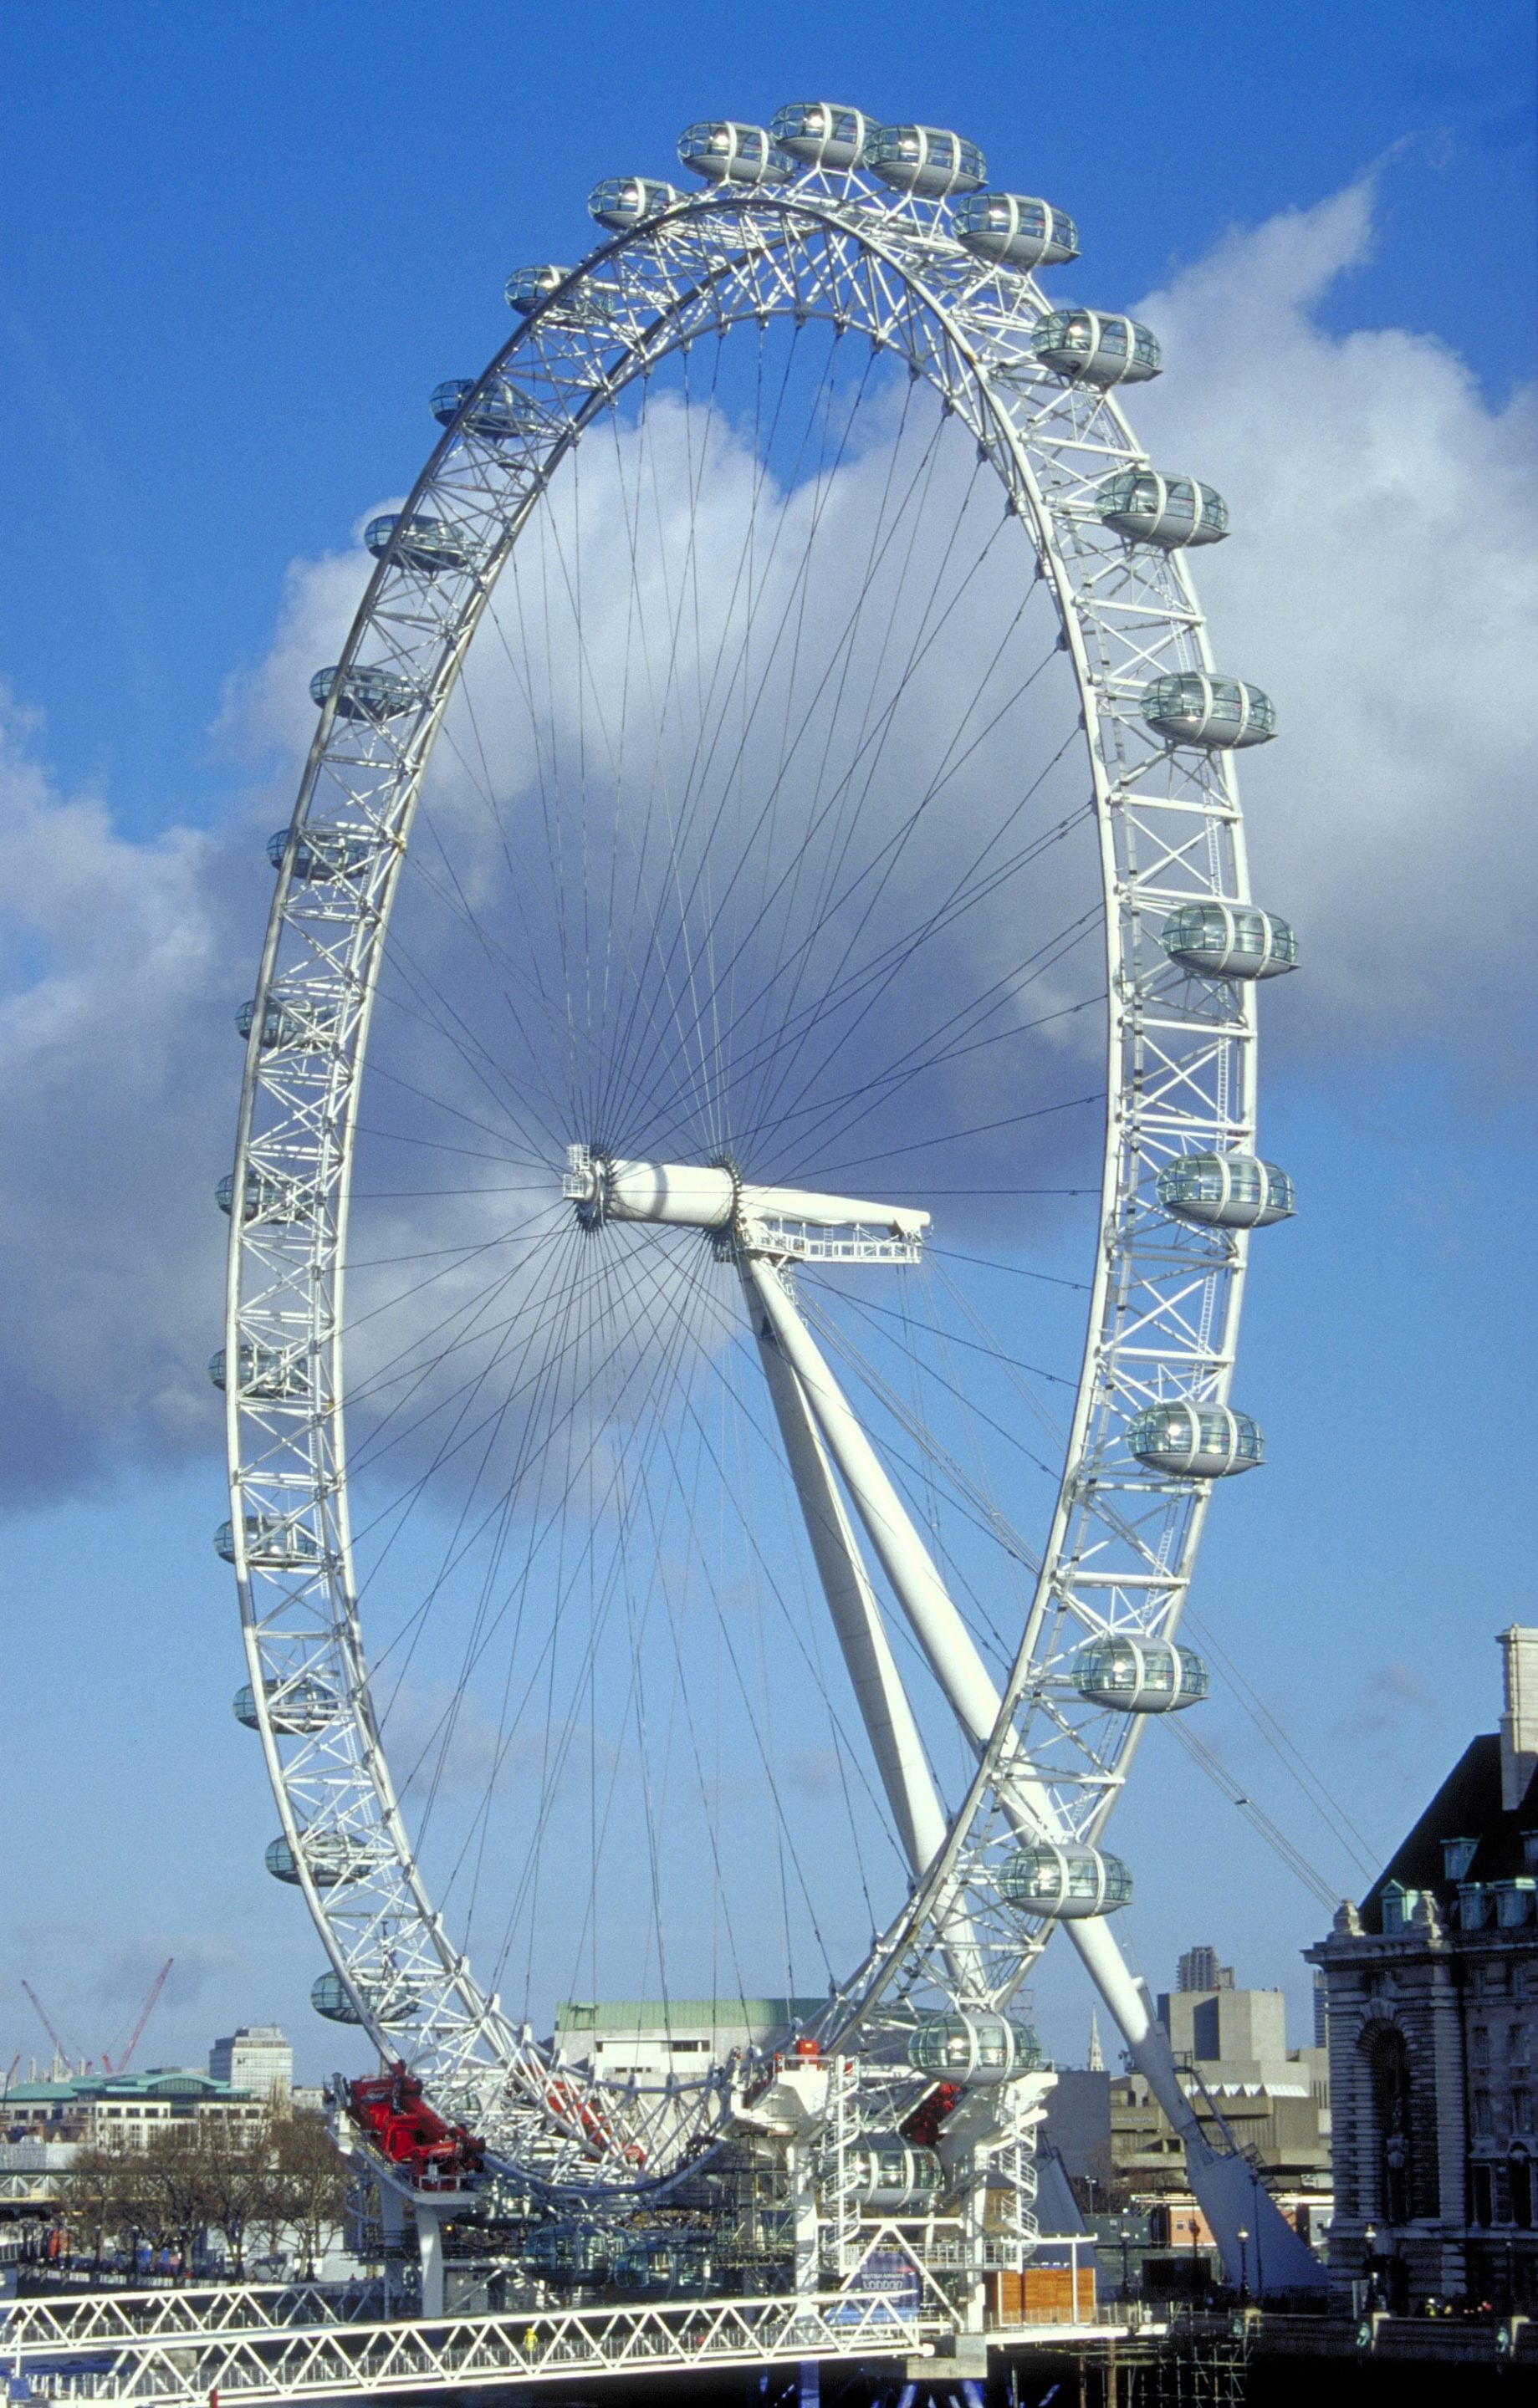 For a fantastic bird's-eye view of London, board the London Eye.